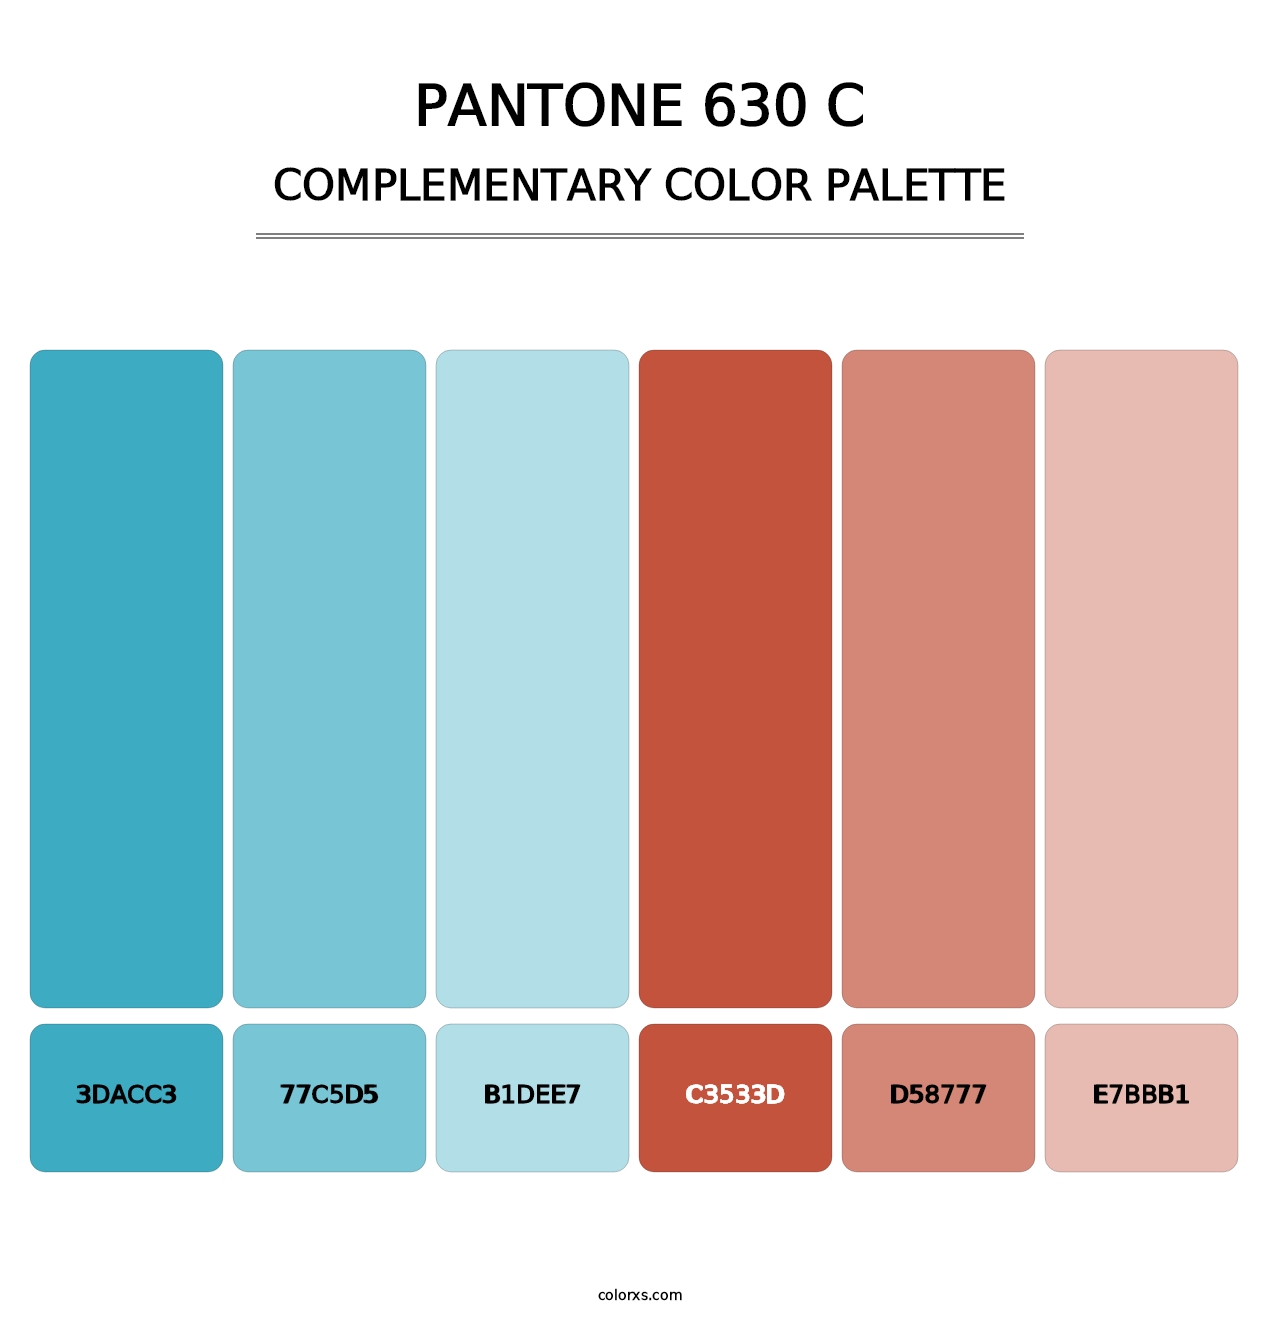 PANTONE 630 C - Complementary Color Palette